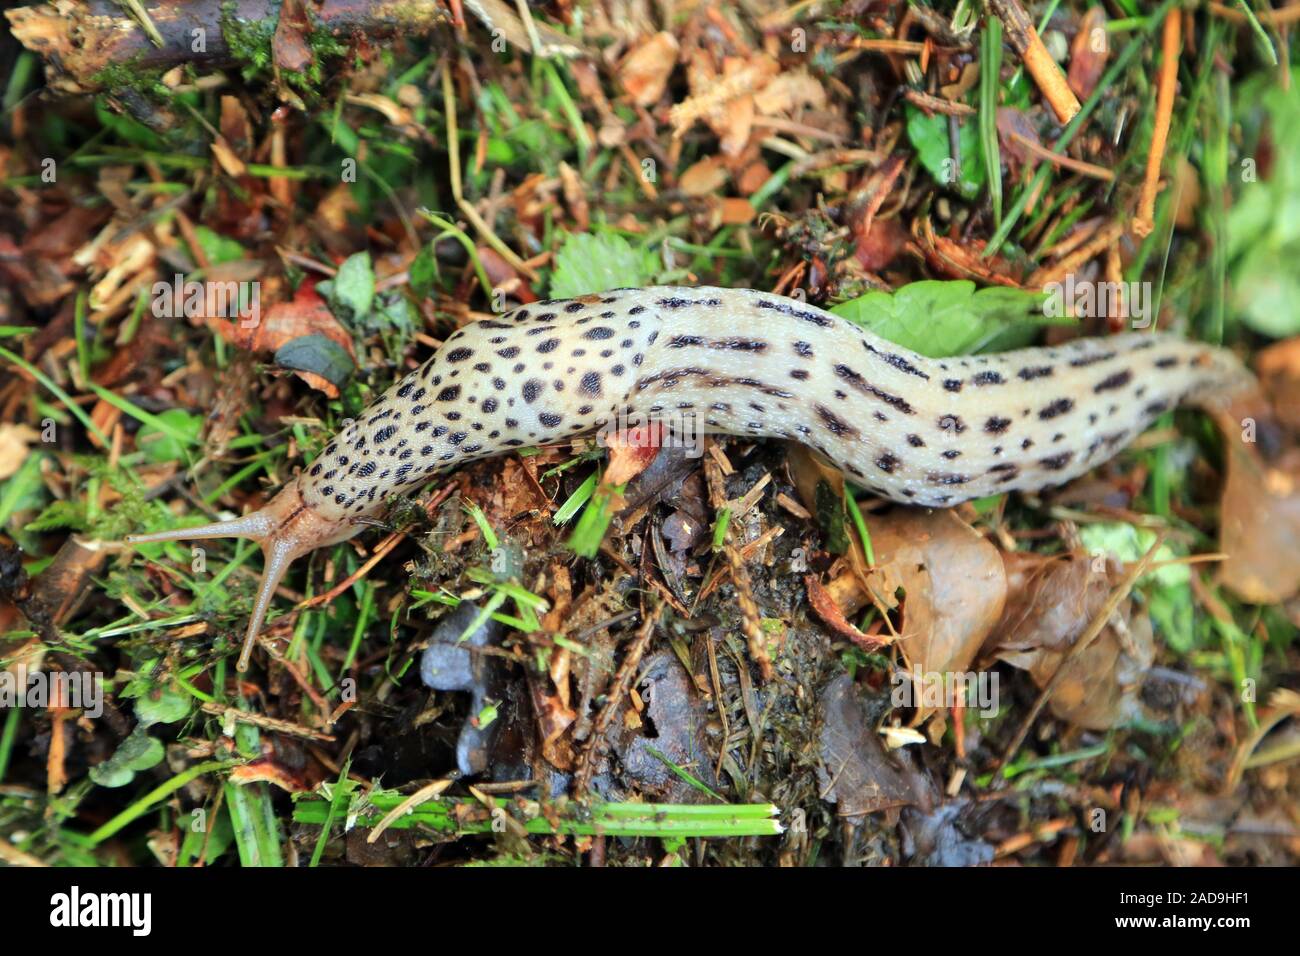 Tigerschnegel, leopard slug, Limax maximus Foto Stock